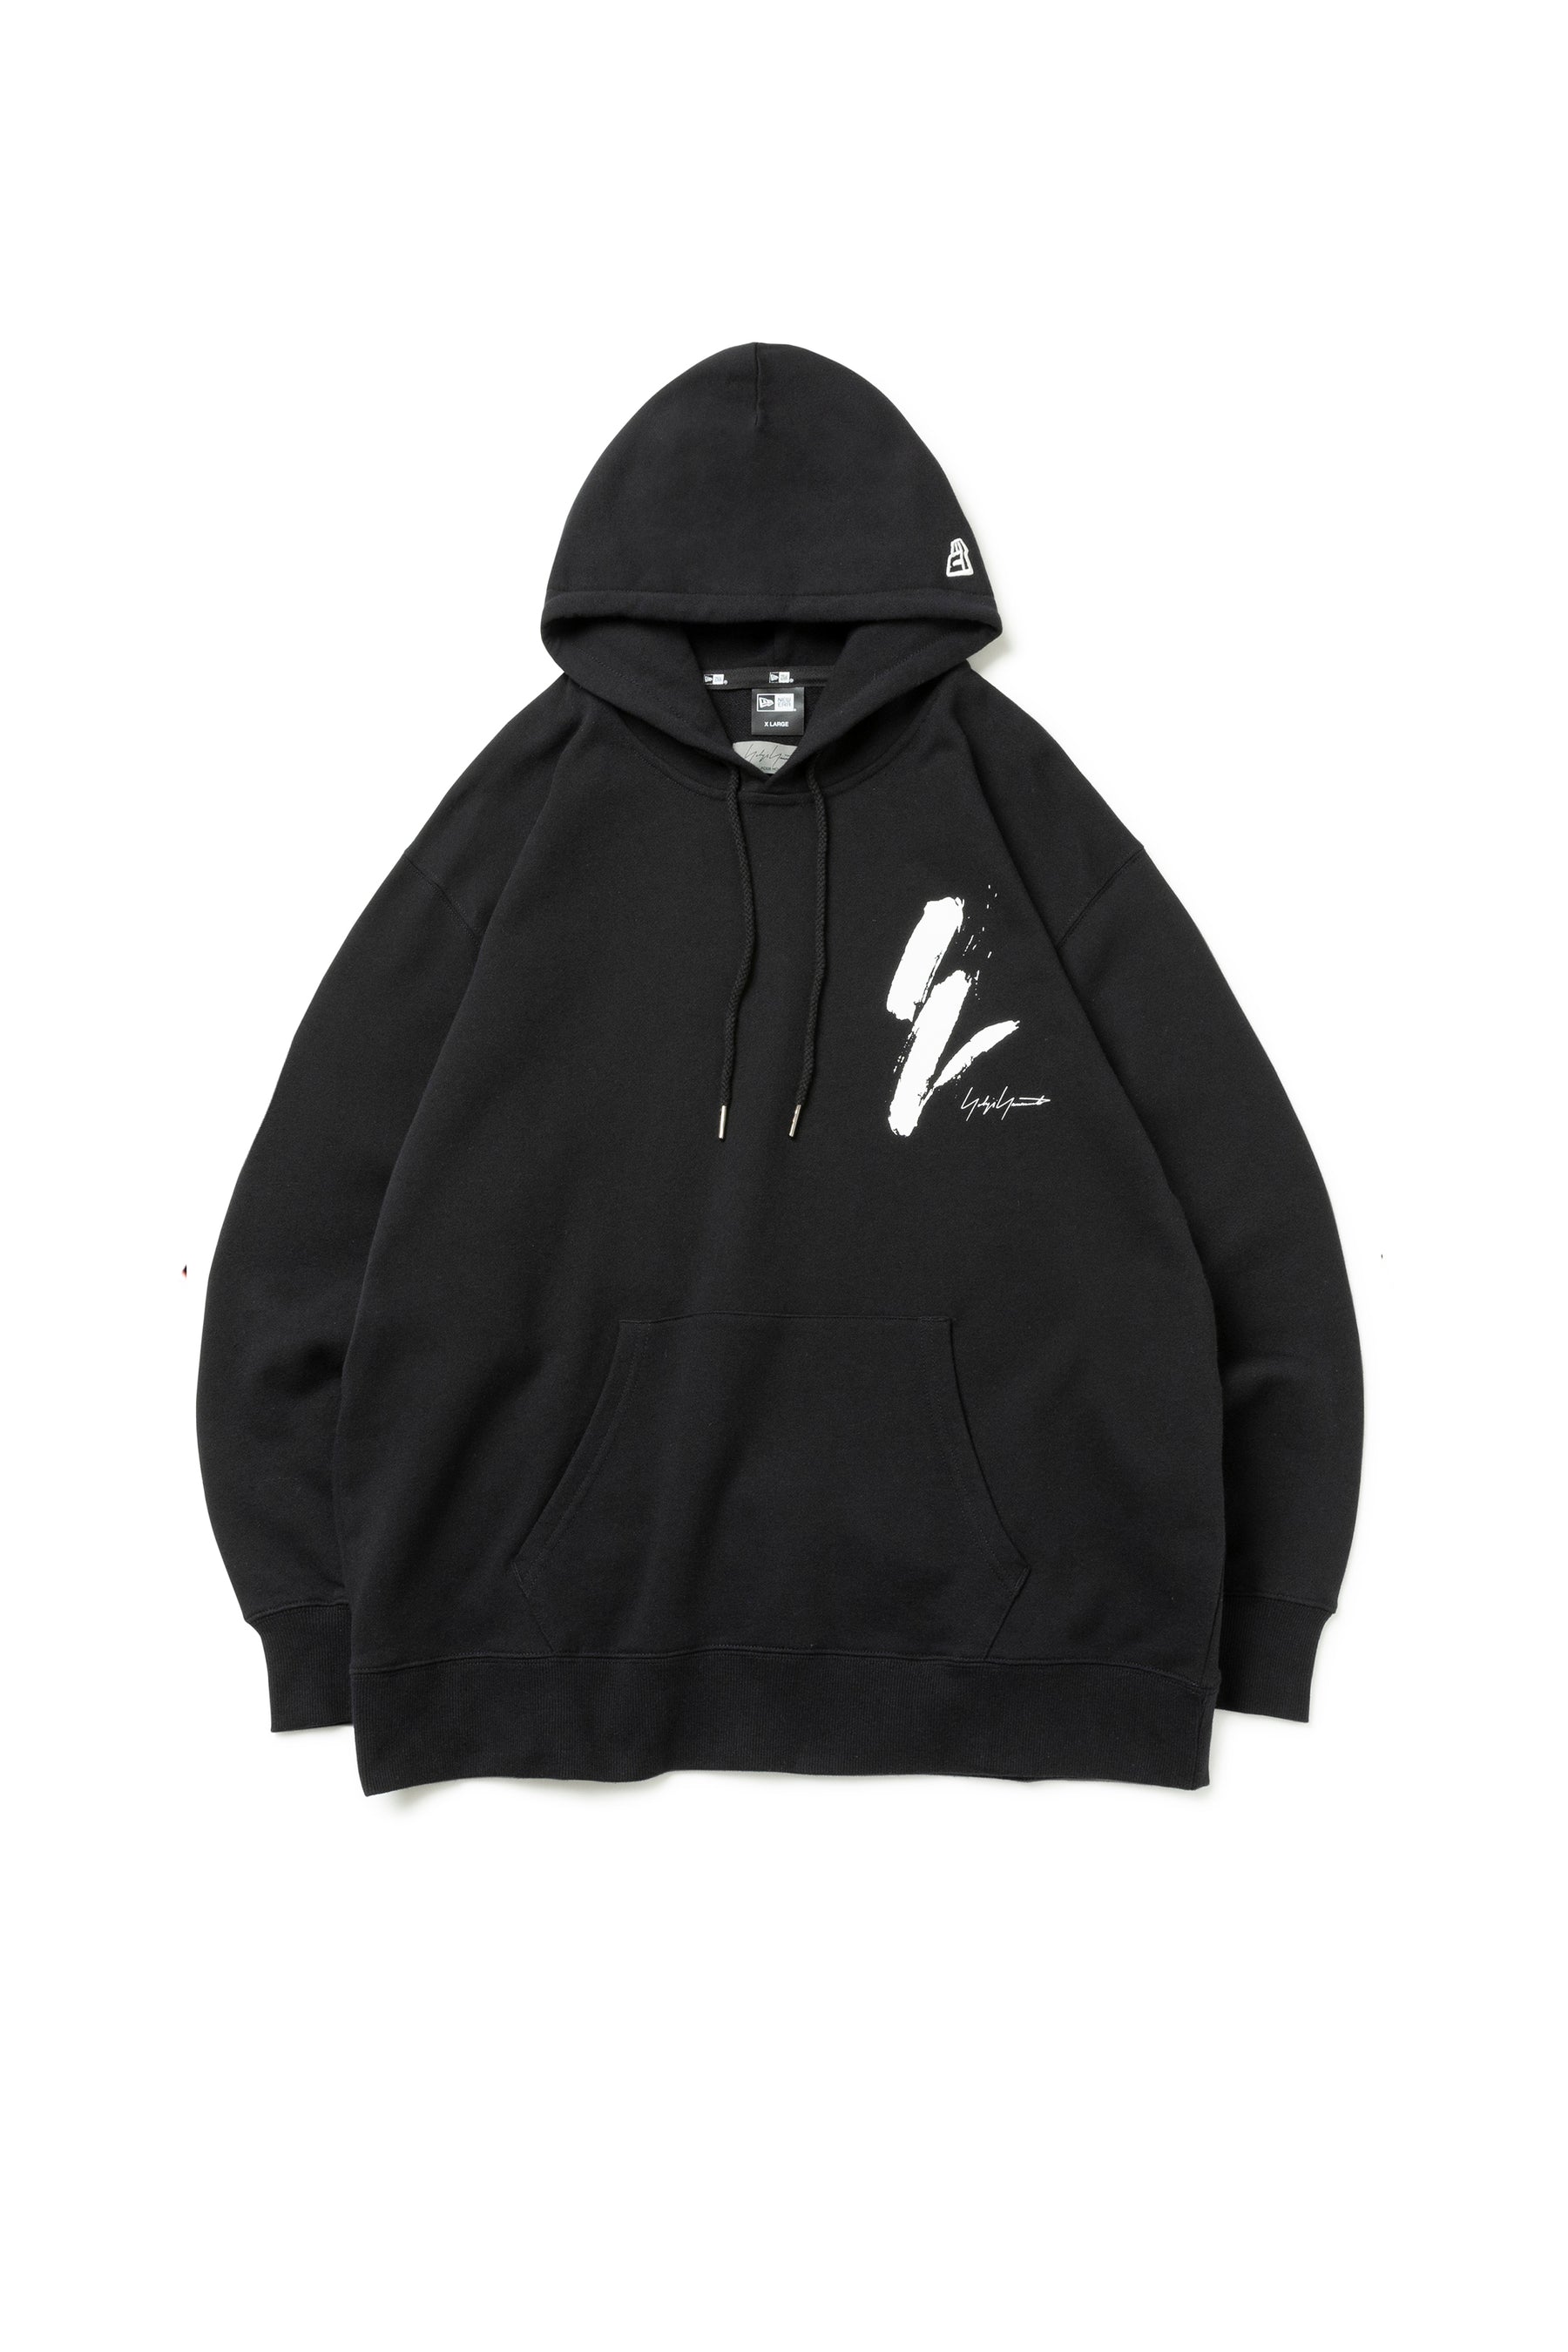 yohji yamamoto hoodie